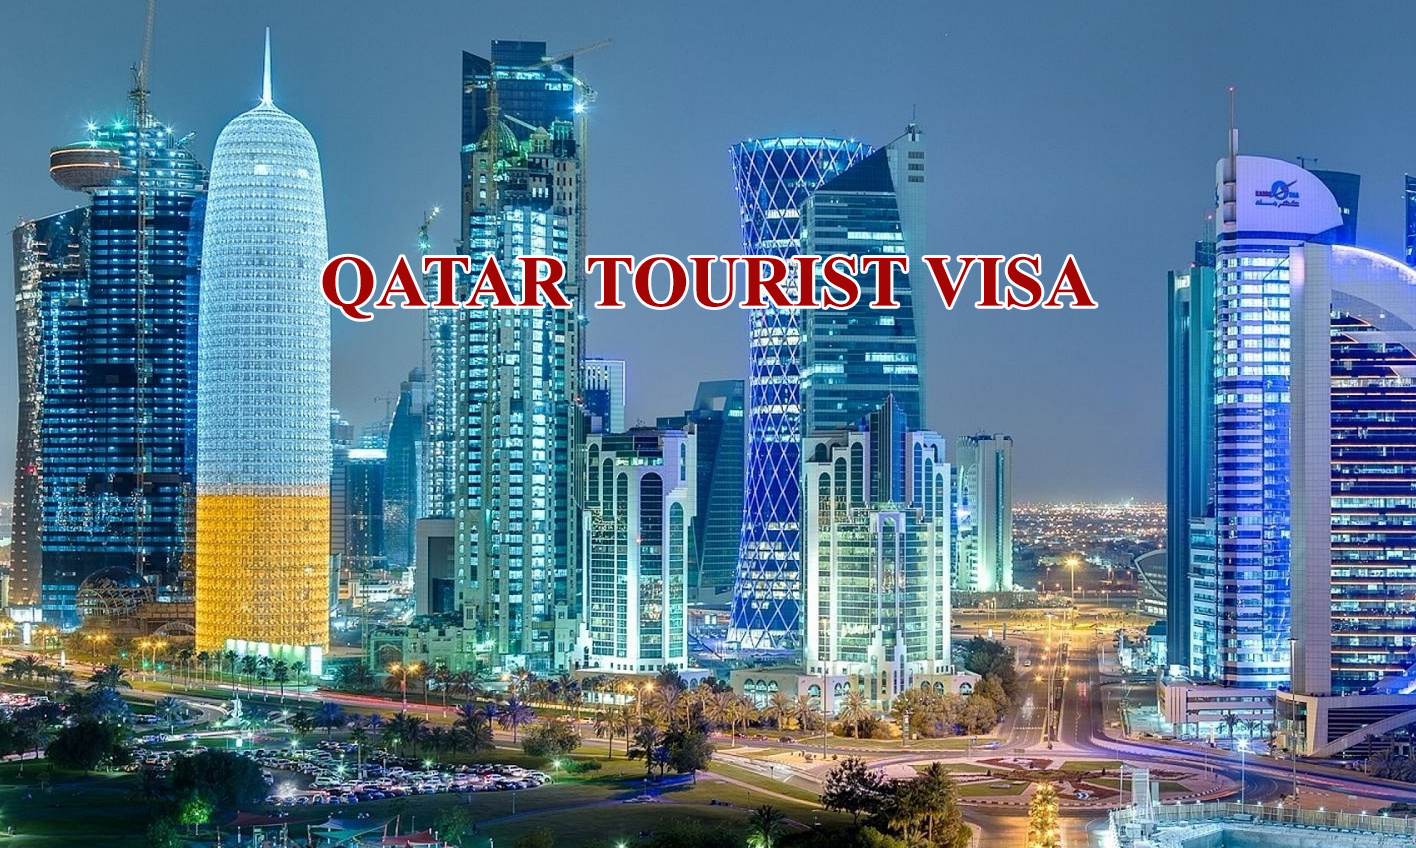 Qatar tourist visa